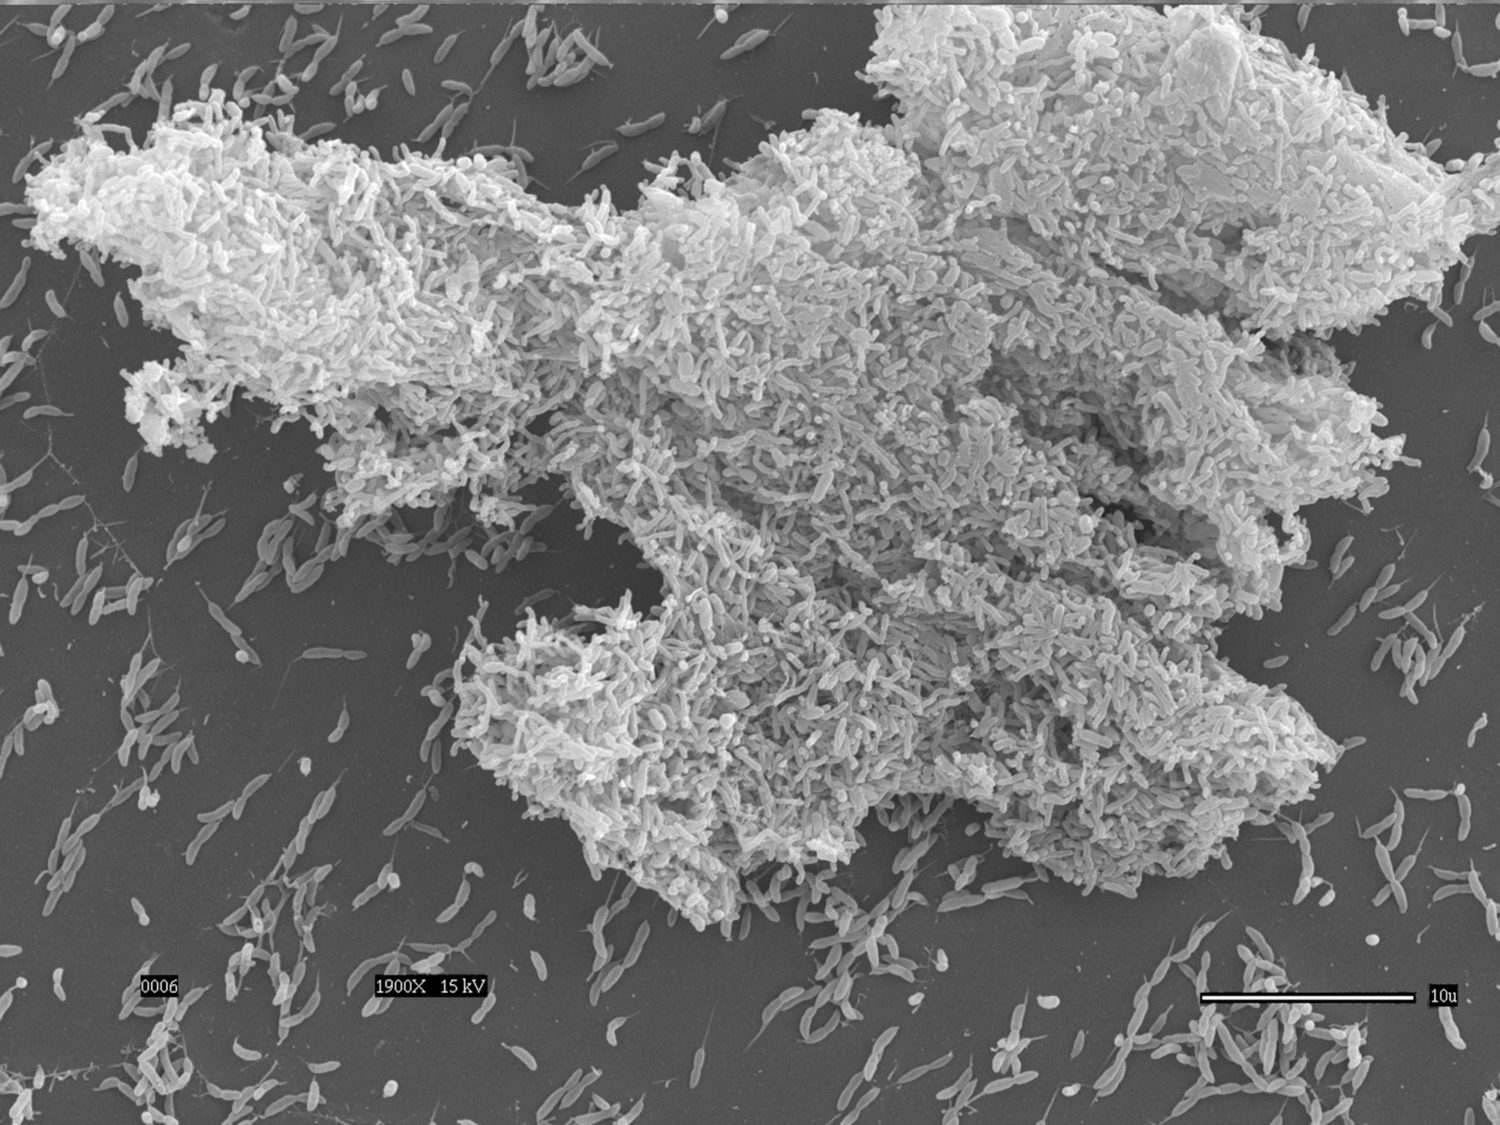 Scanning electron microscopy of the L. rhamnosus CRL 1332 biofilm